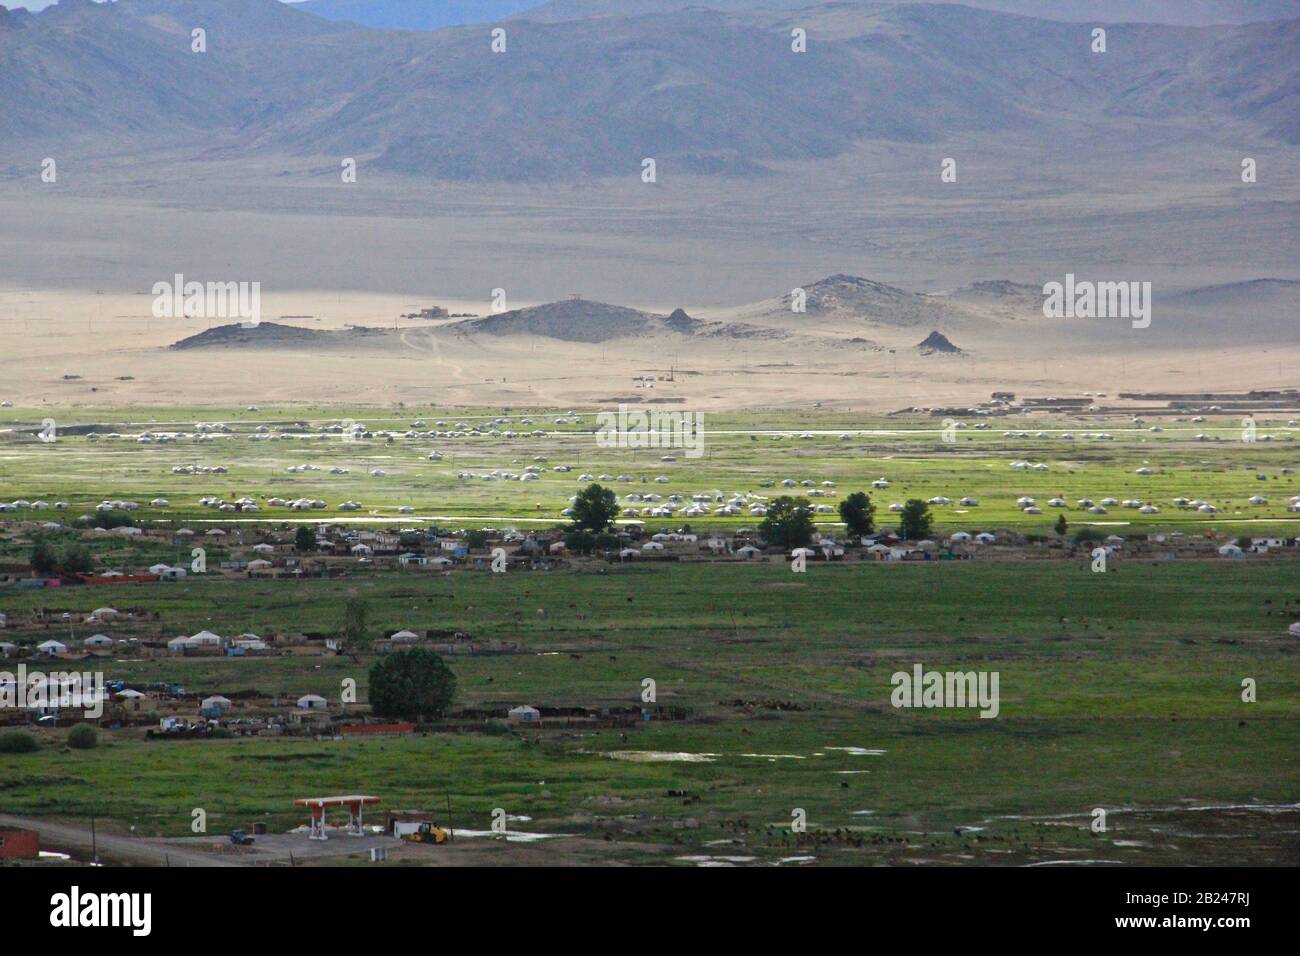 Naturaleza silvestre de Mongolia Occidental Foto de stock